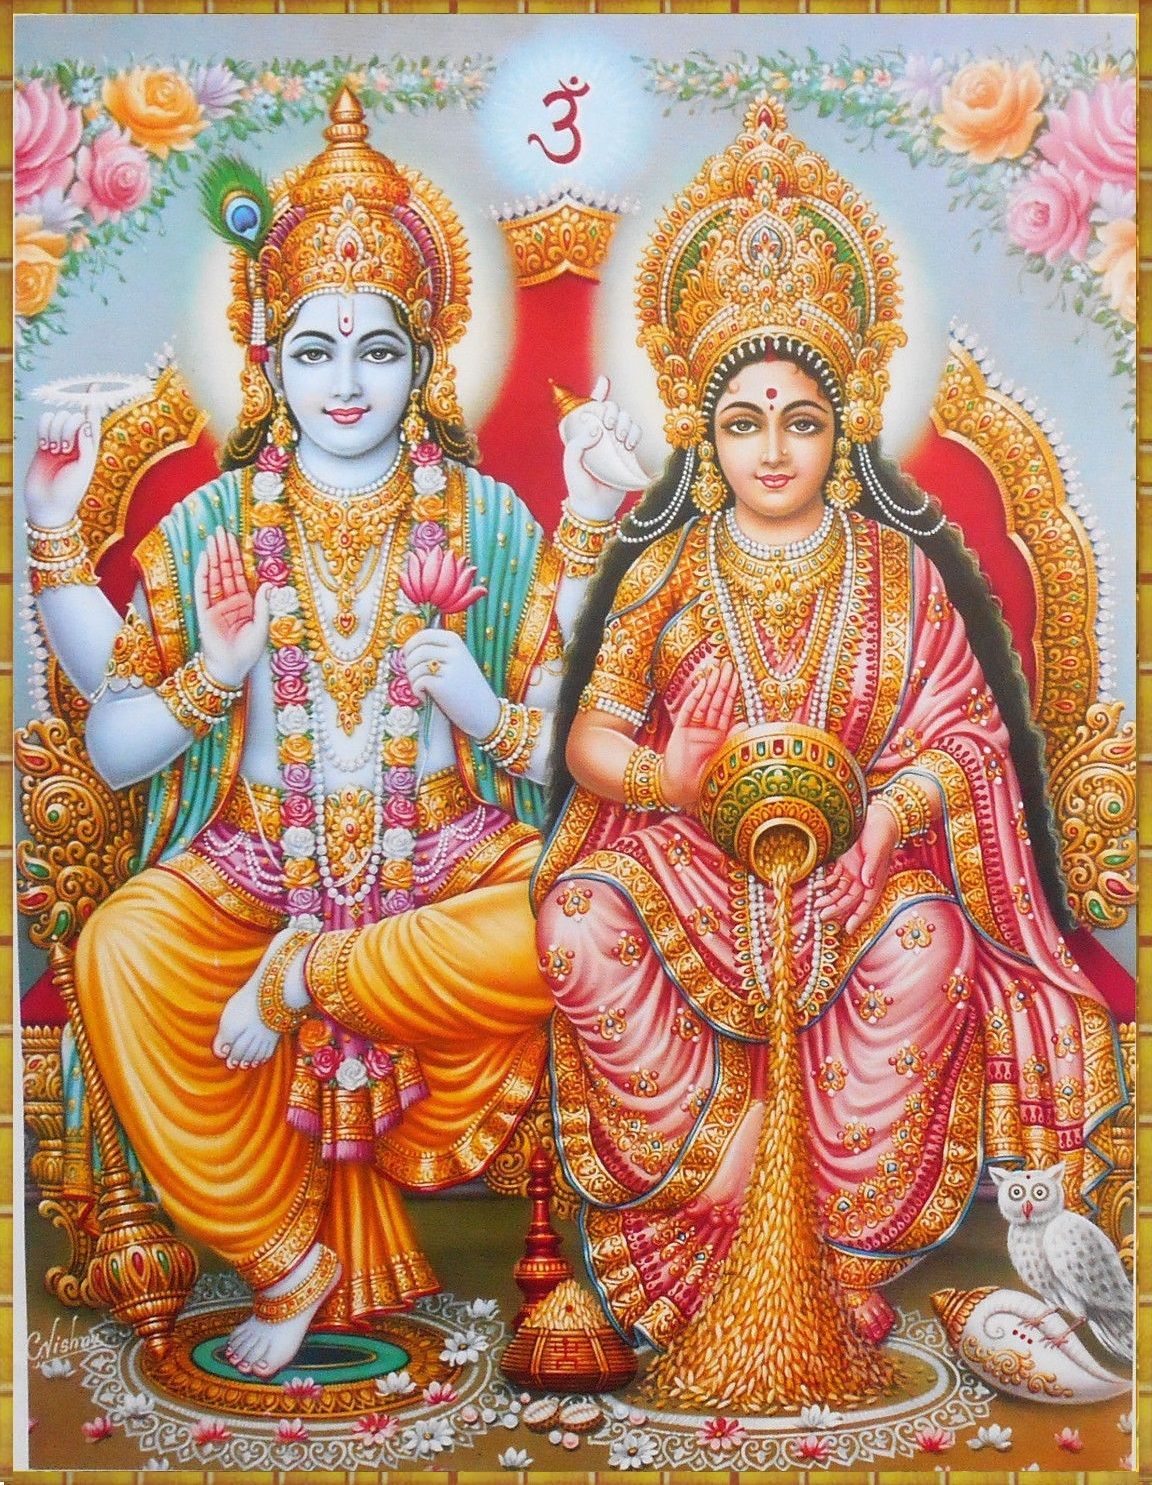 Lakshmi Narayana. Vishnu, Durga goddess, Hindu deities